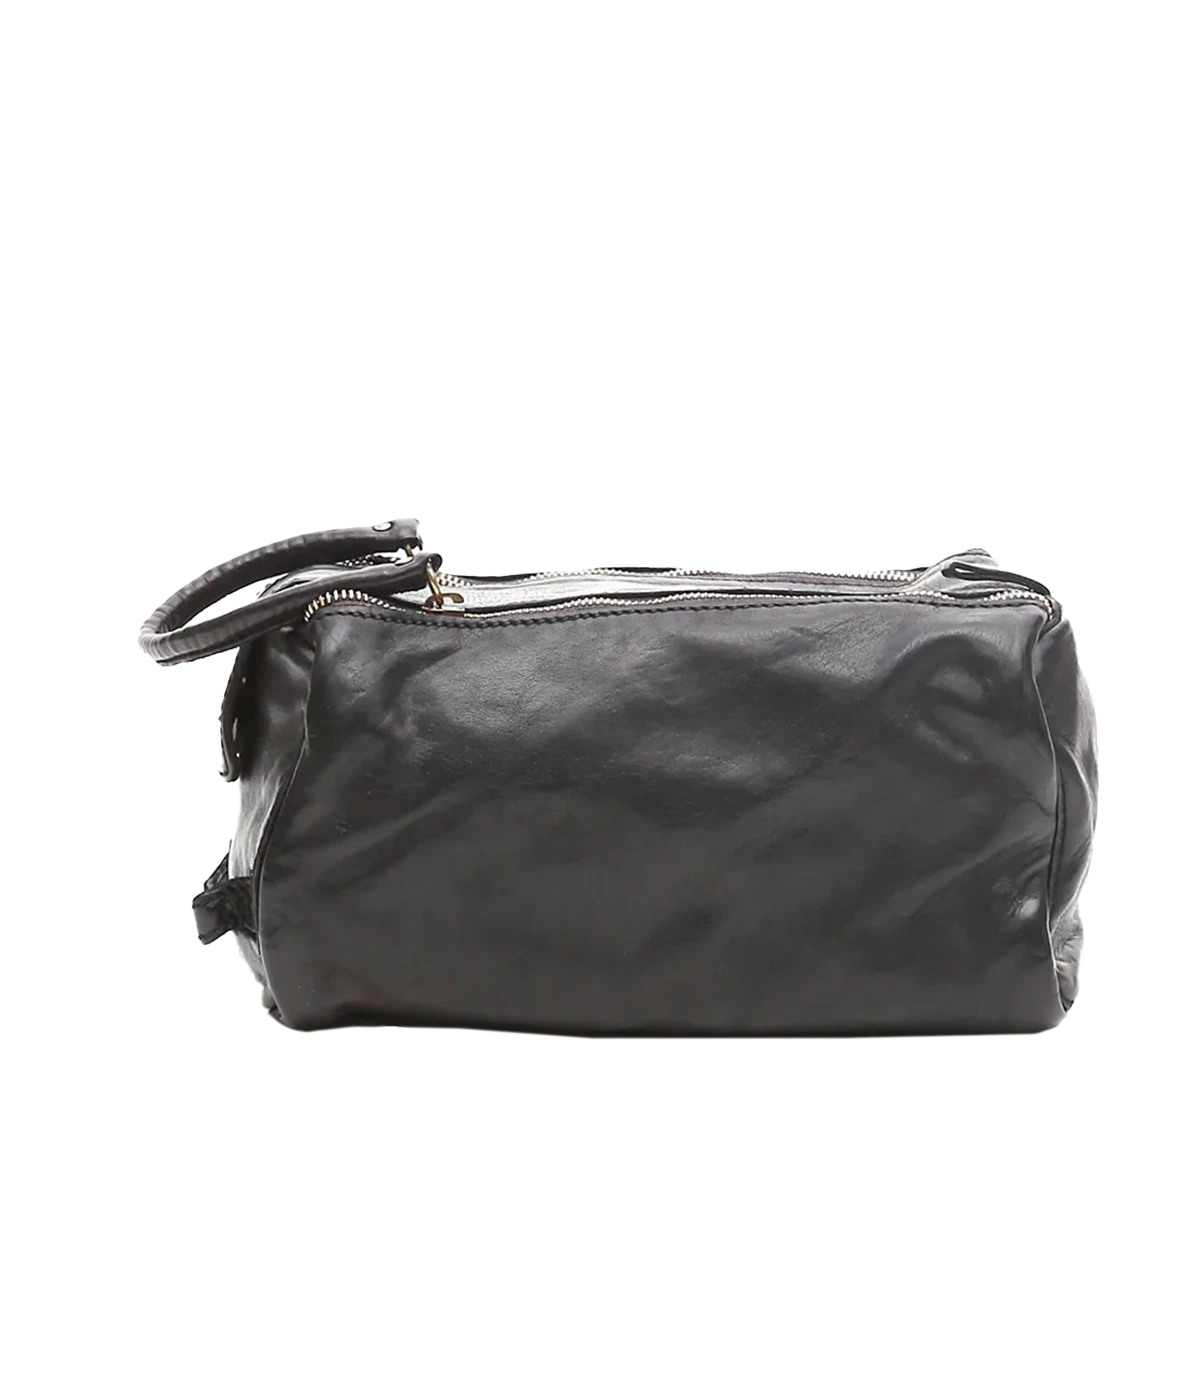 Leather Toiletries Bag in Black